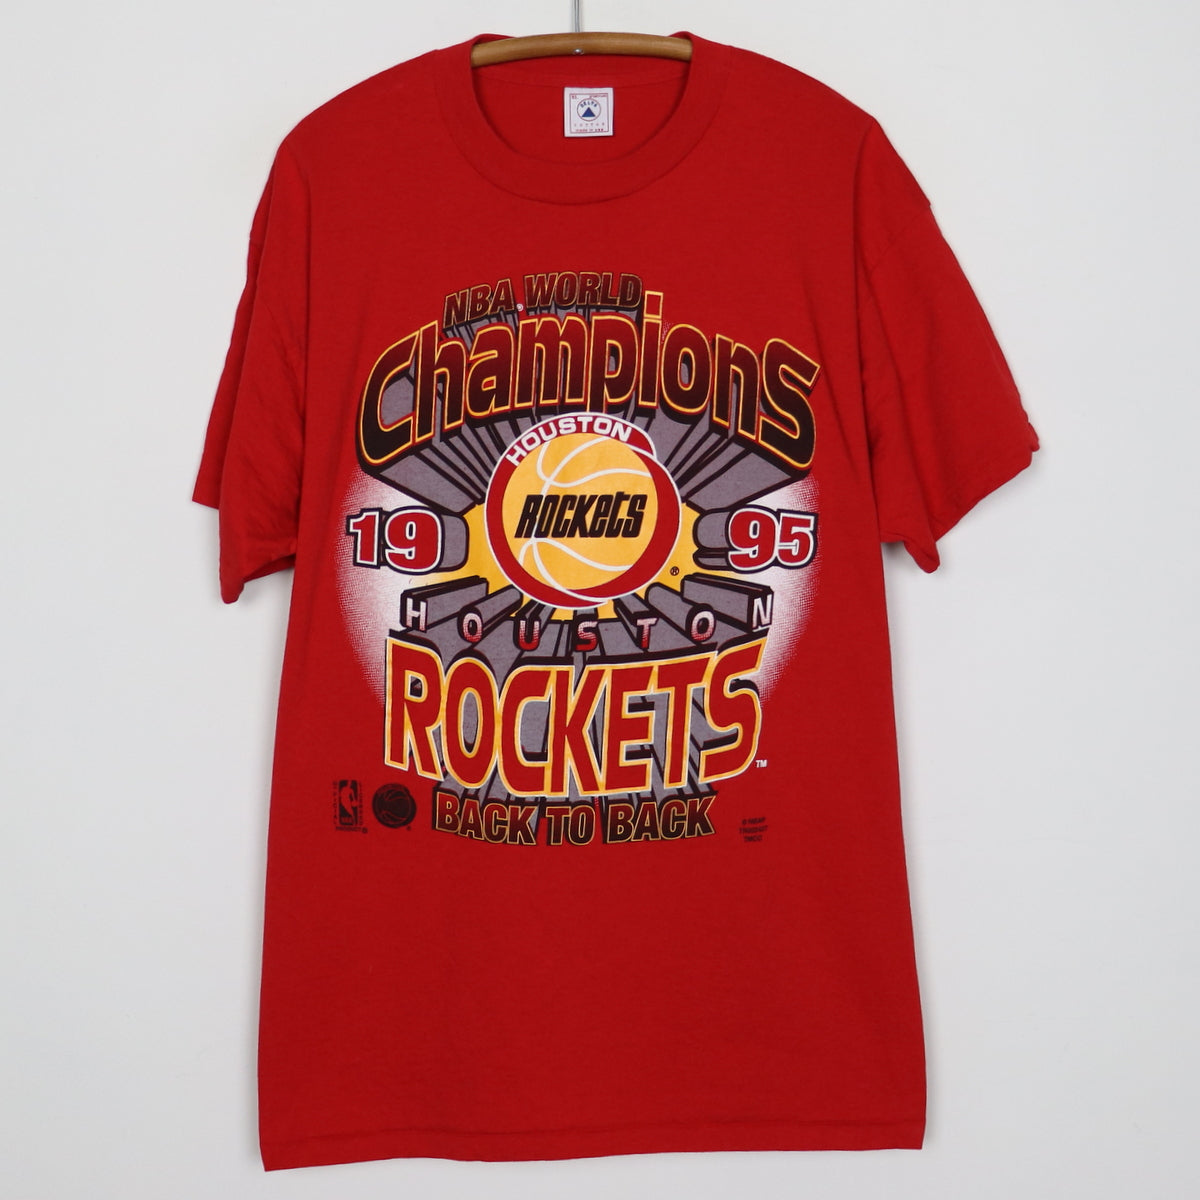 1995 rockets championship